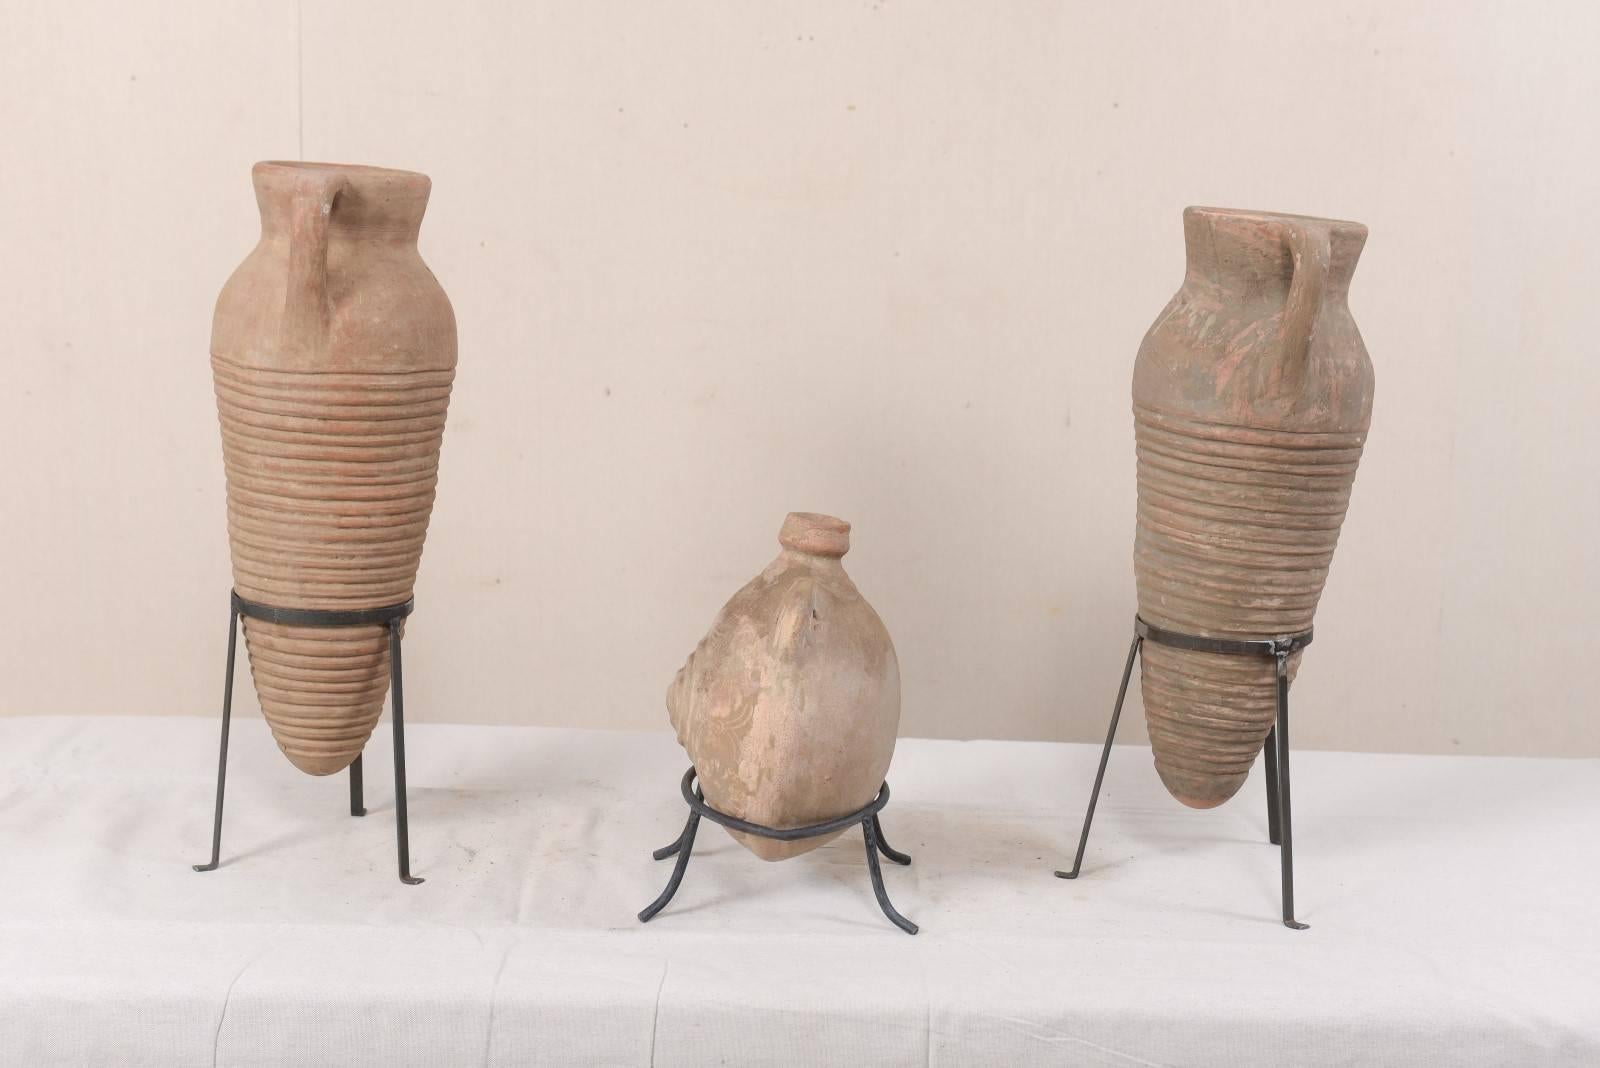 Collection de trois pots en terre cuite de style colonial espagnol méditerranéen en vente 1